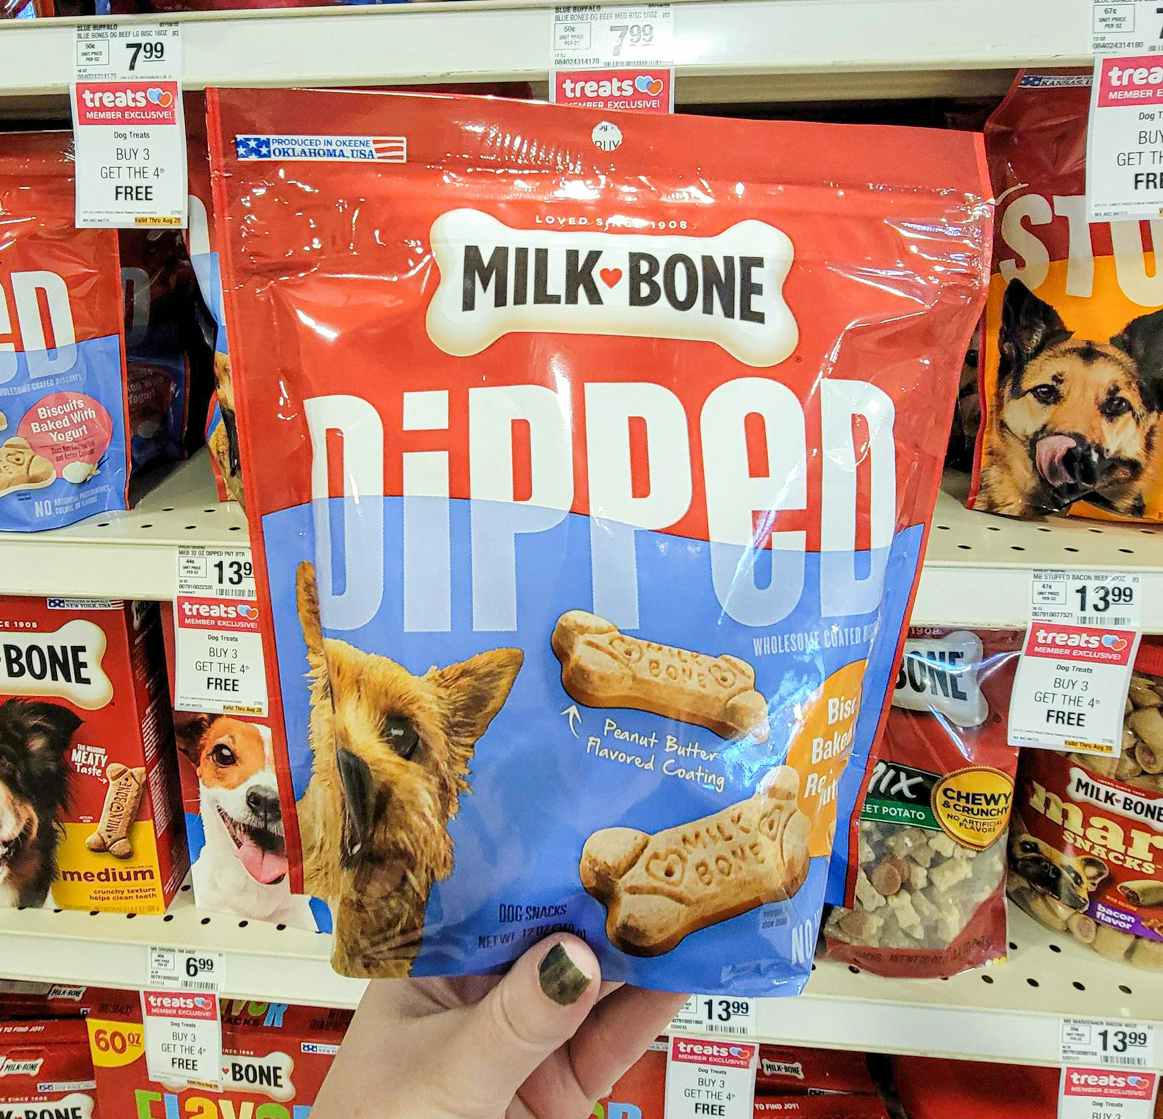 hand holding a bag of milk bone dipped dog treats